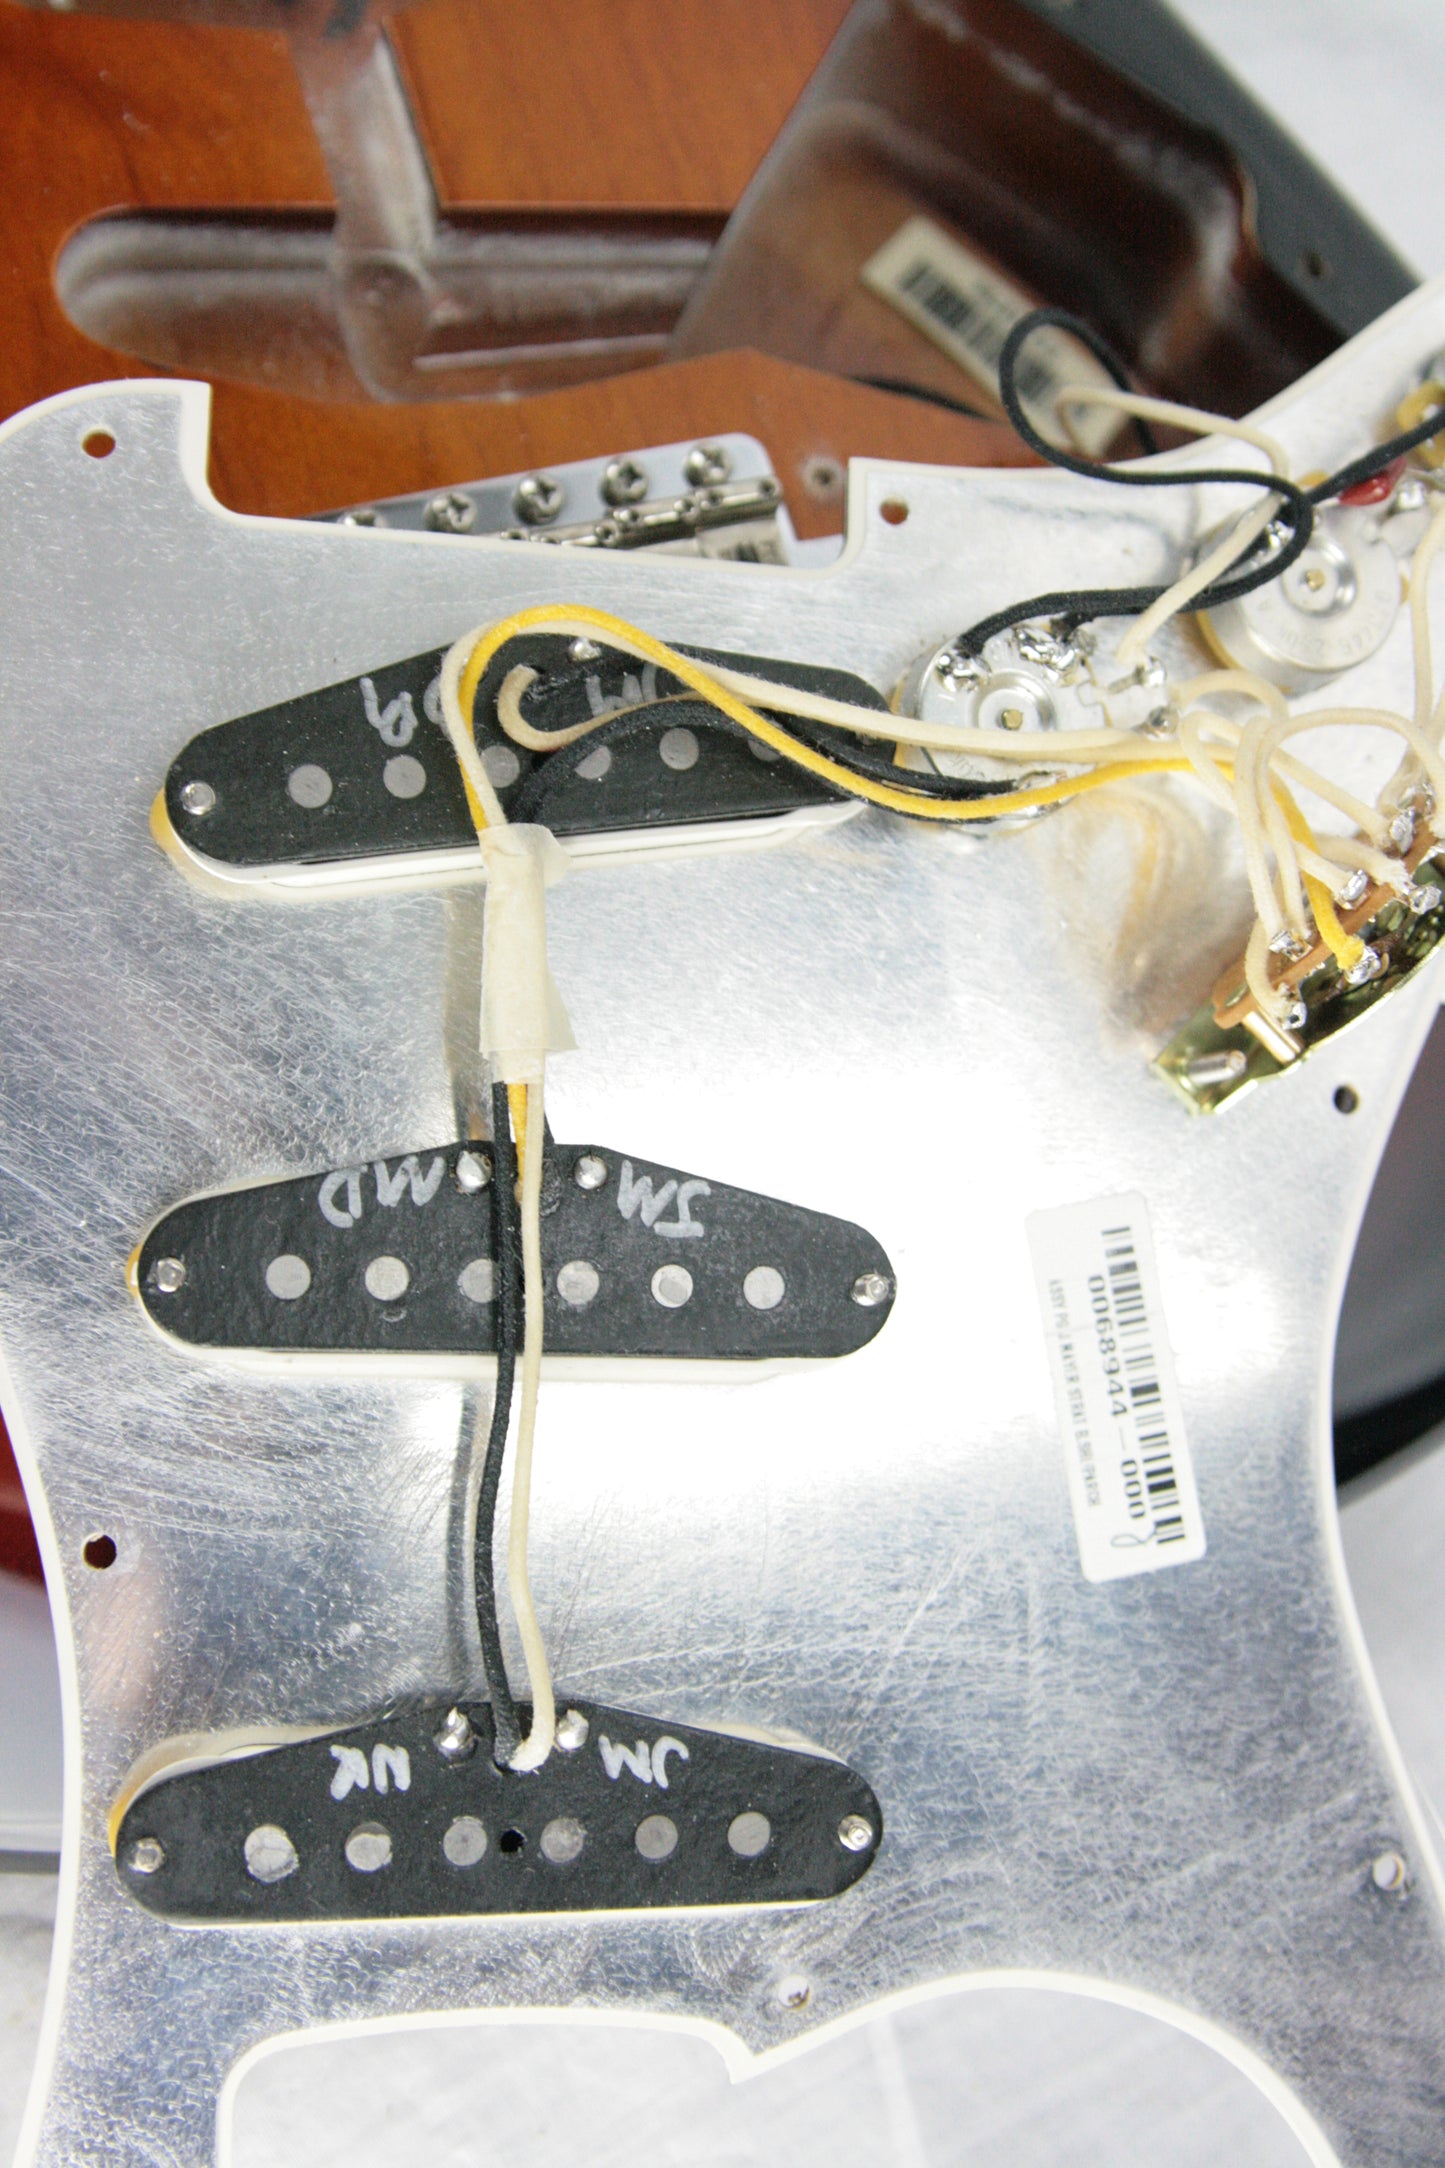 MINTY 2014 Fender John Mayer Stratocaster Sunburst Strat American USA Big Dipper Pickups!